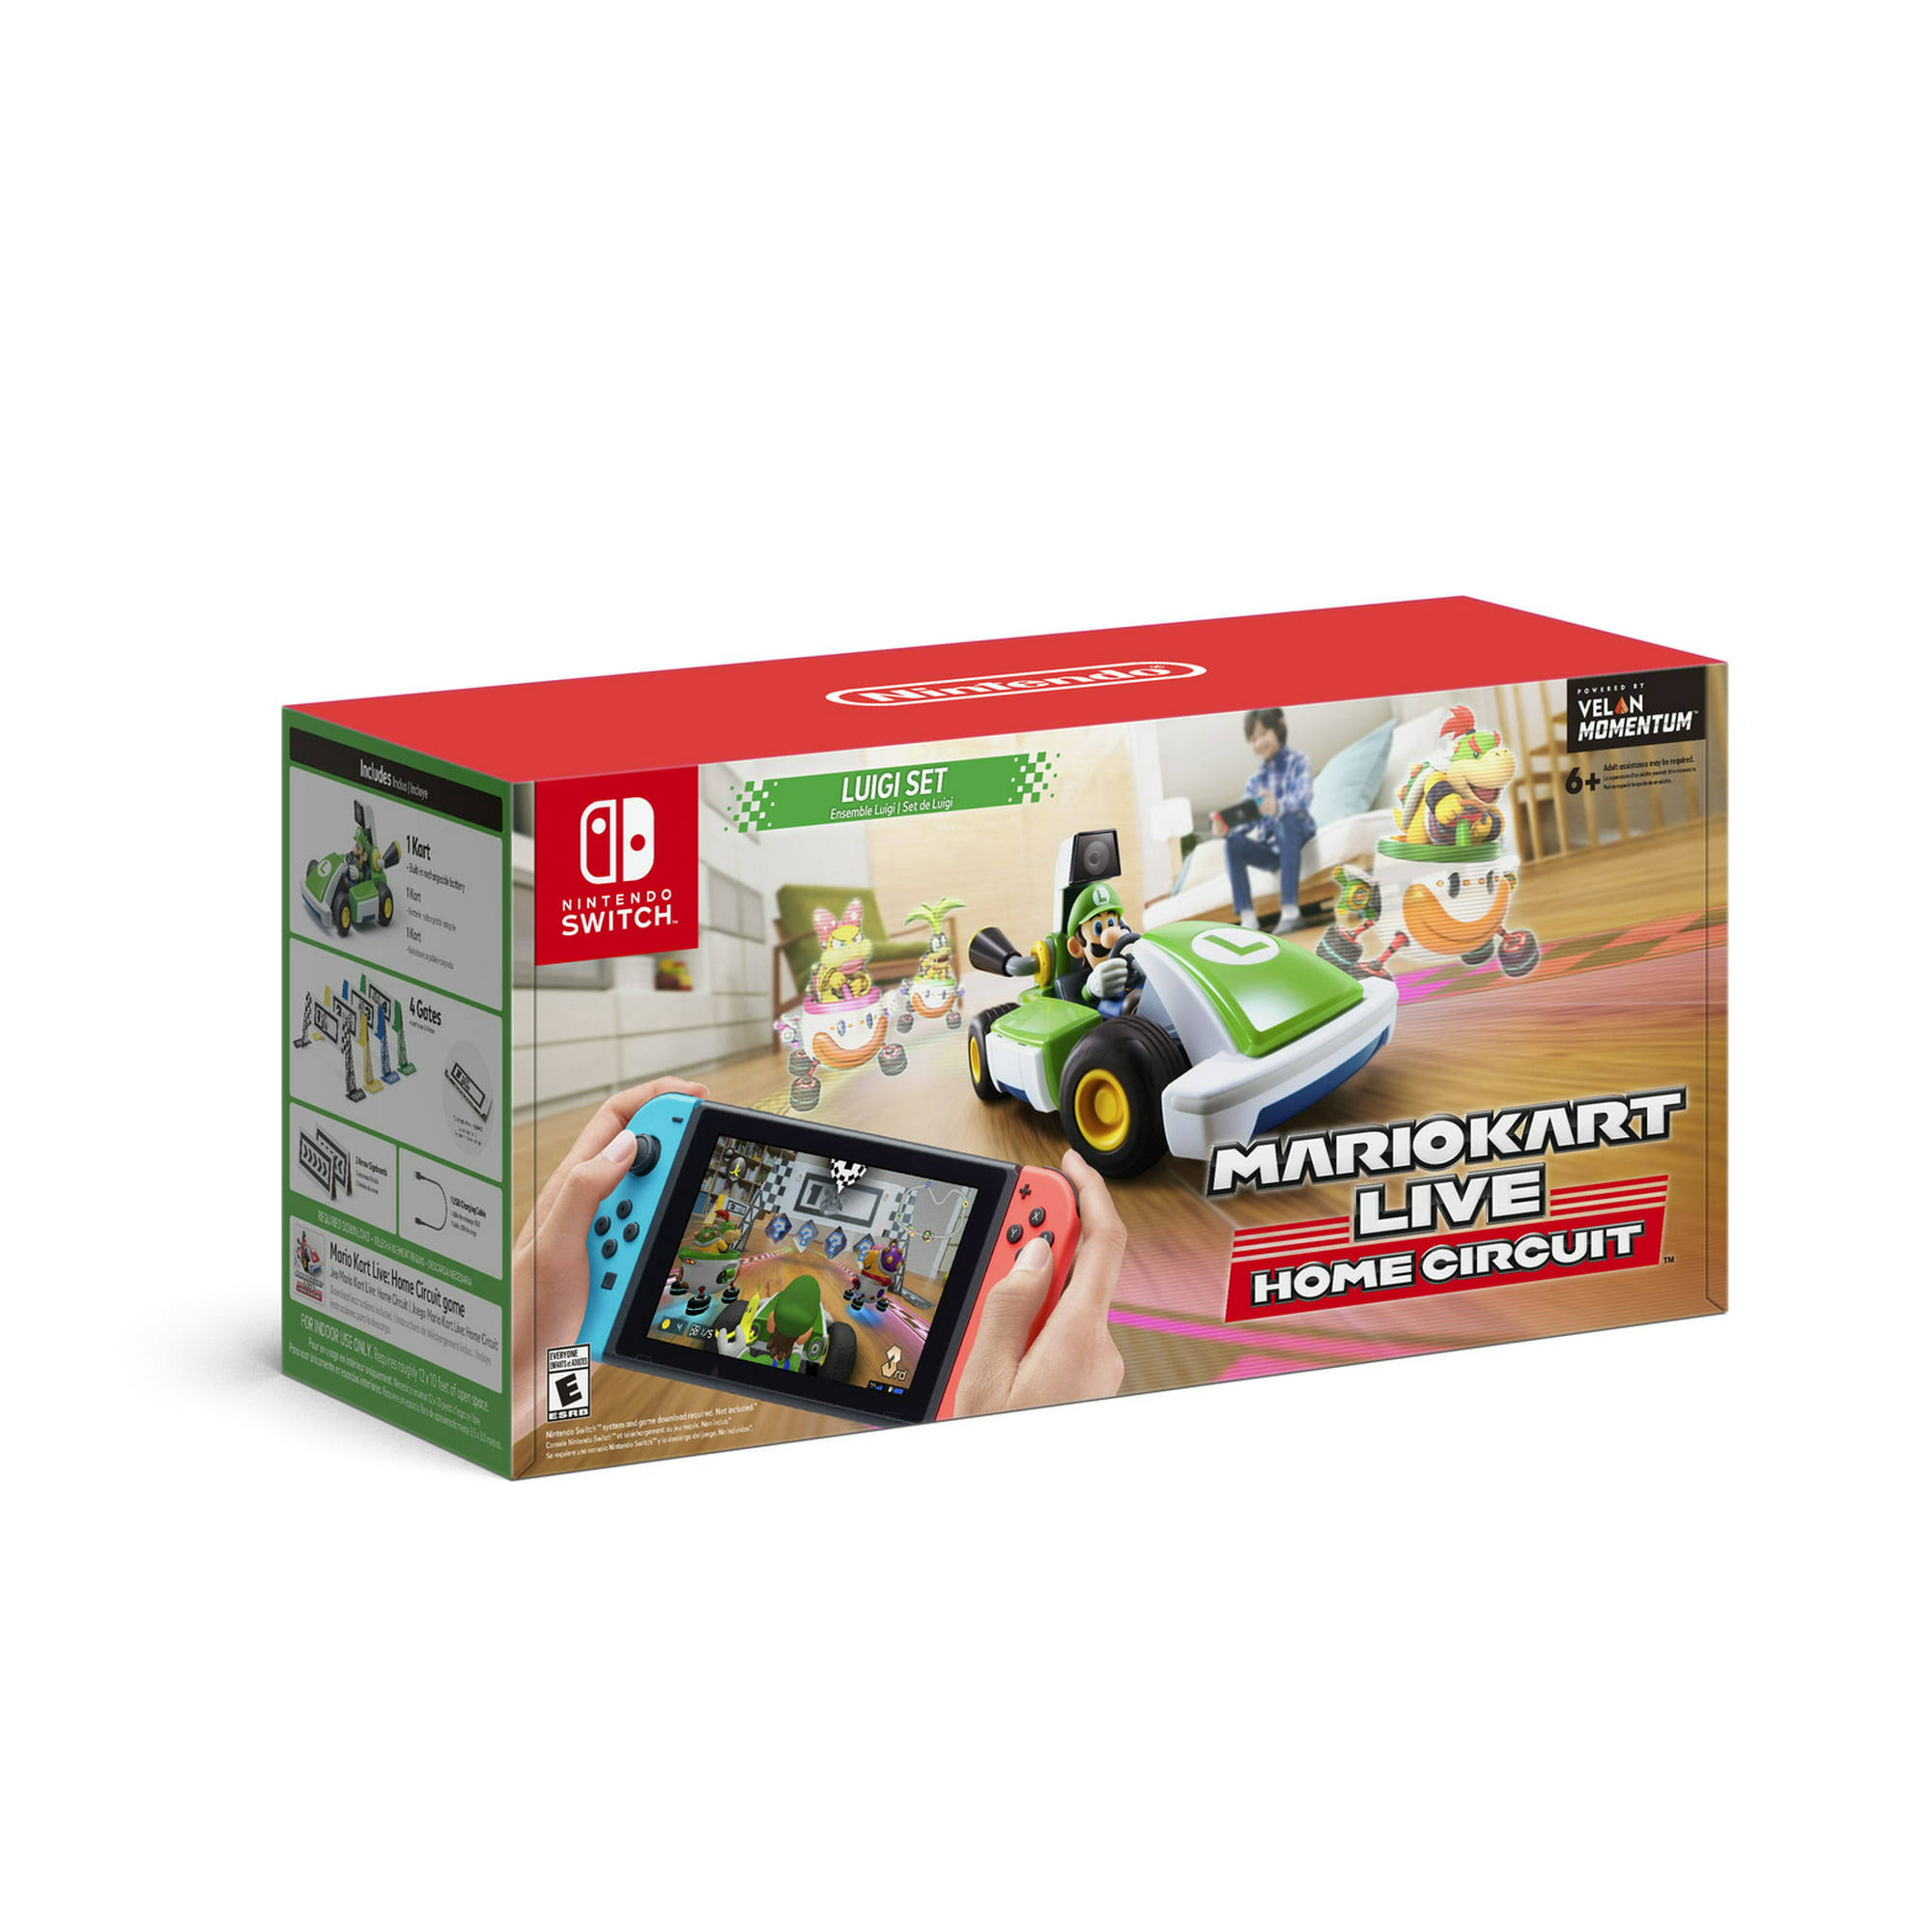 Nintendo Switch Mario Kart Live Home Circuit - Luigi Set